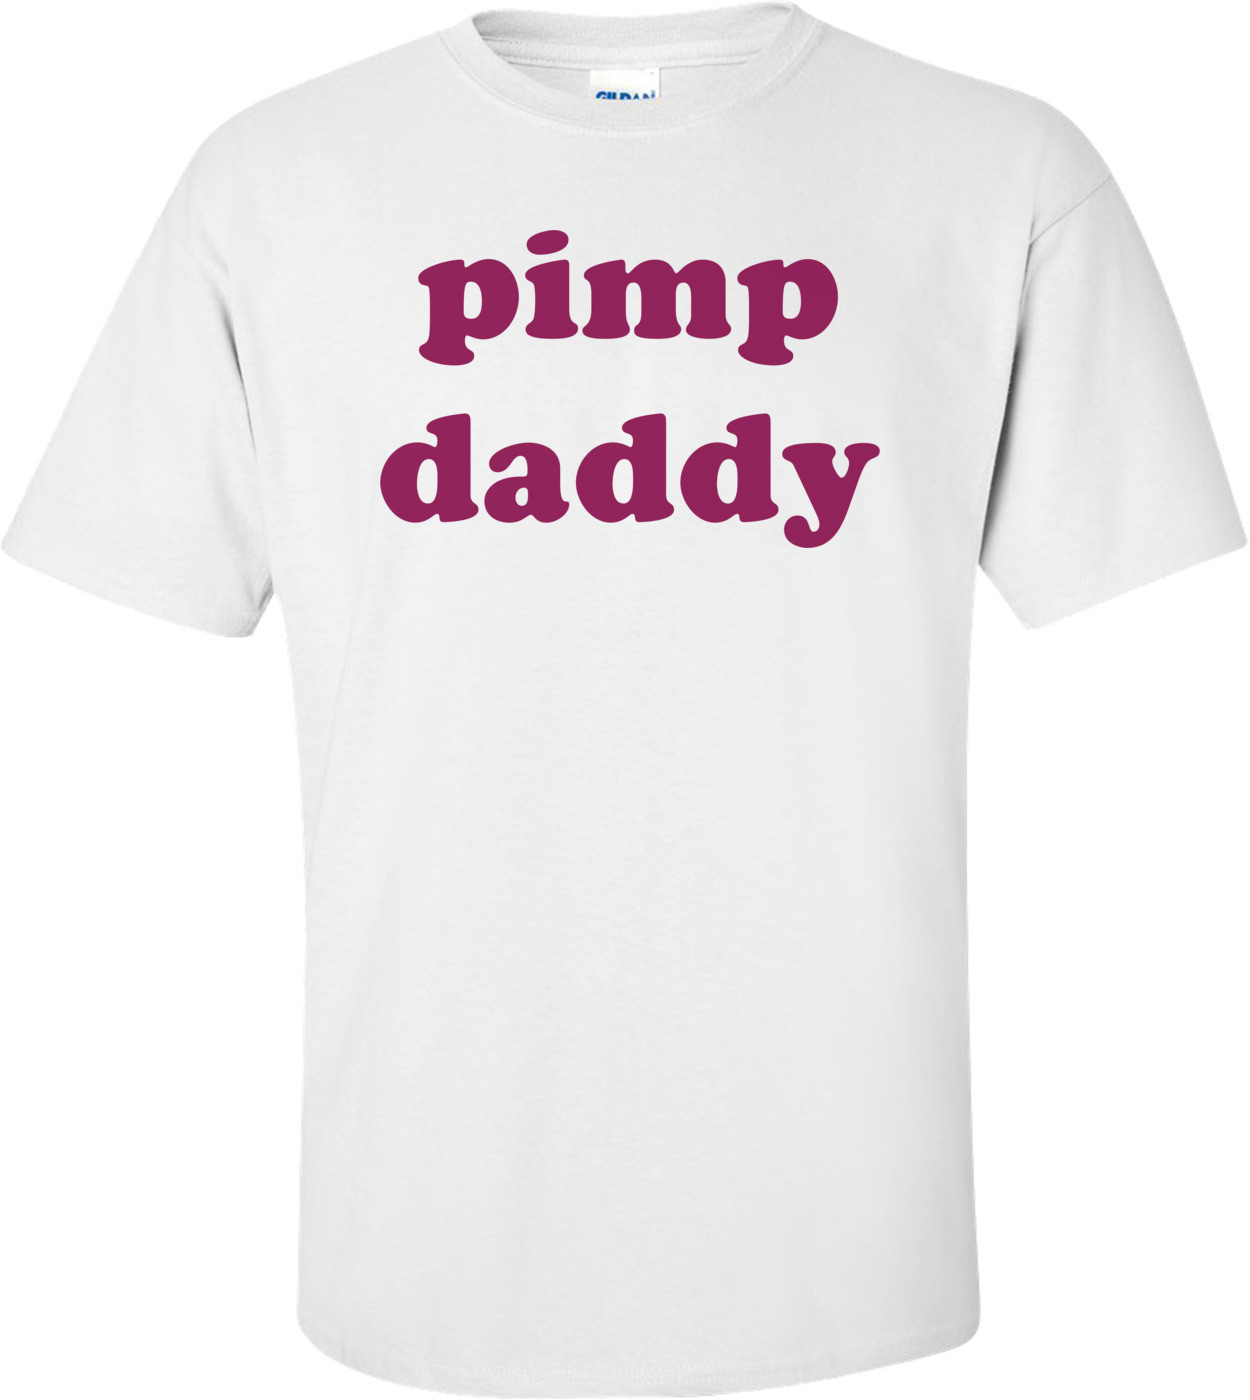 pimp daddy Shirt